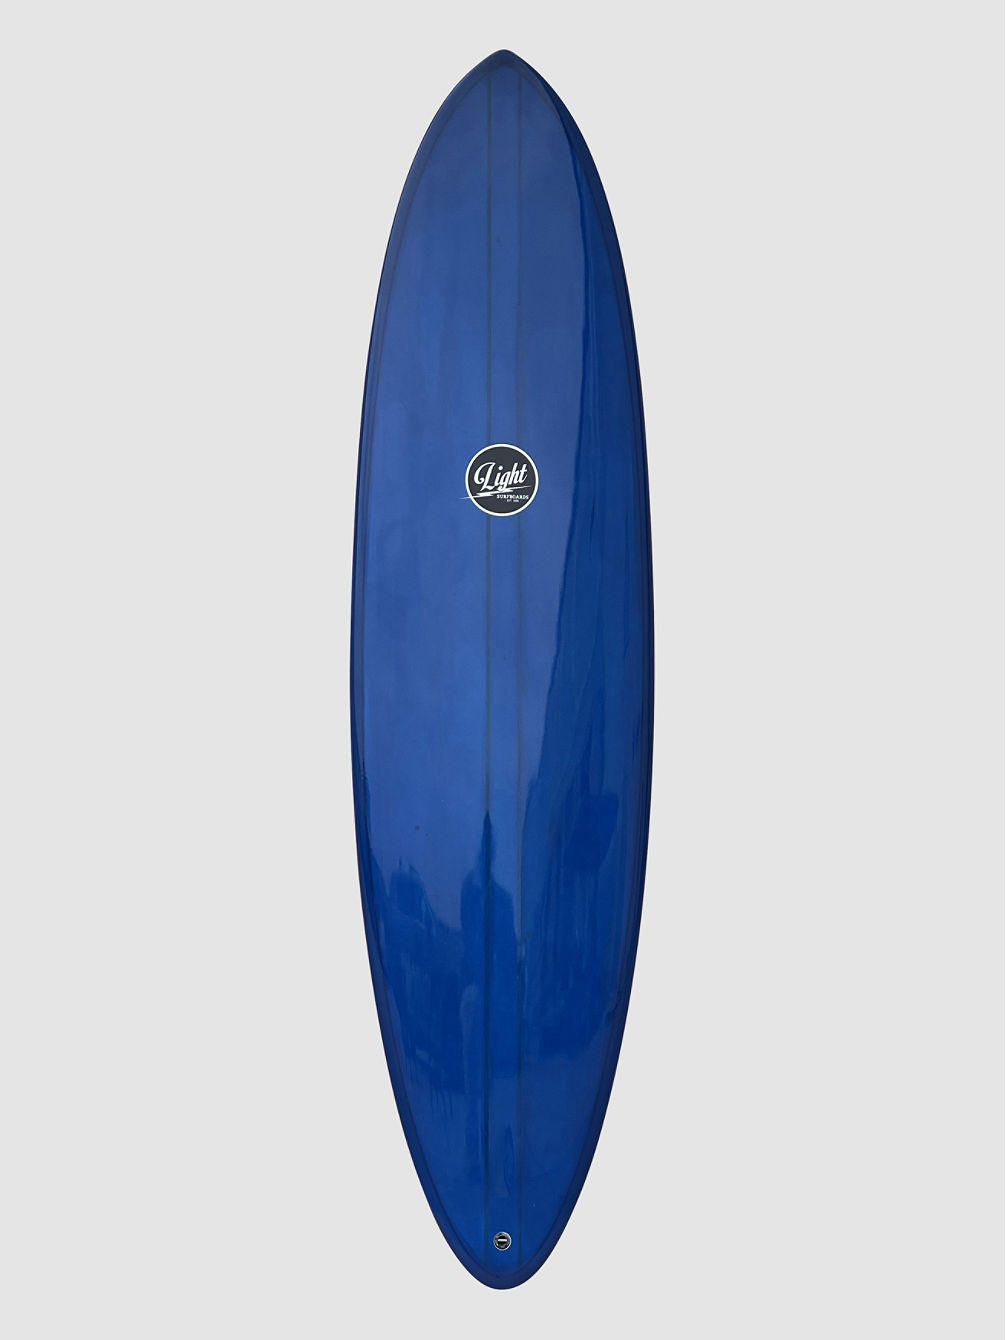 Wide Glider Blue - PU - US + Future  7-1 Surfboard